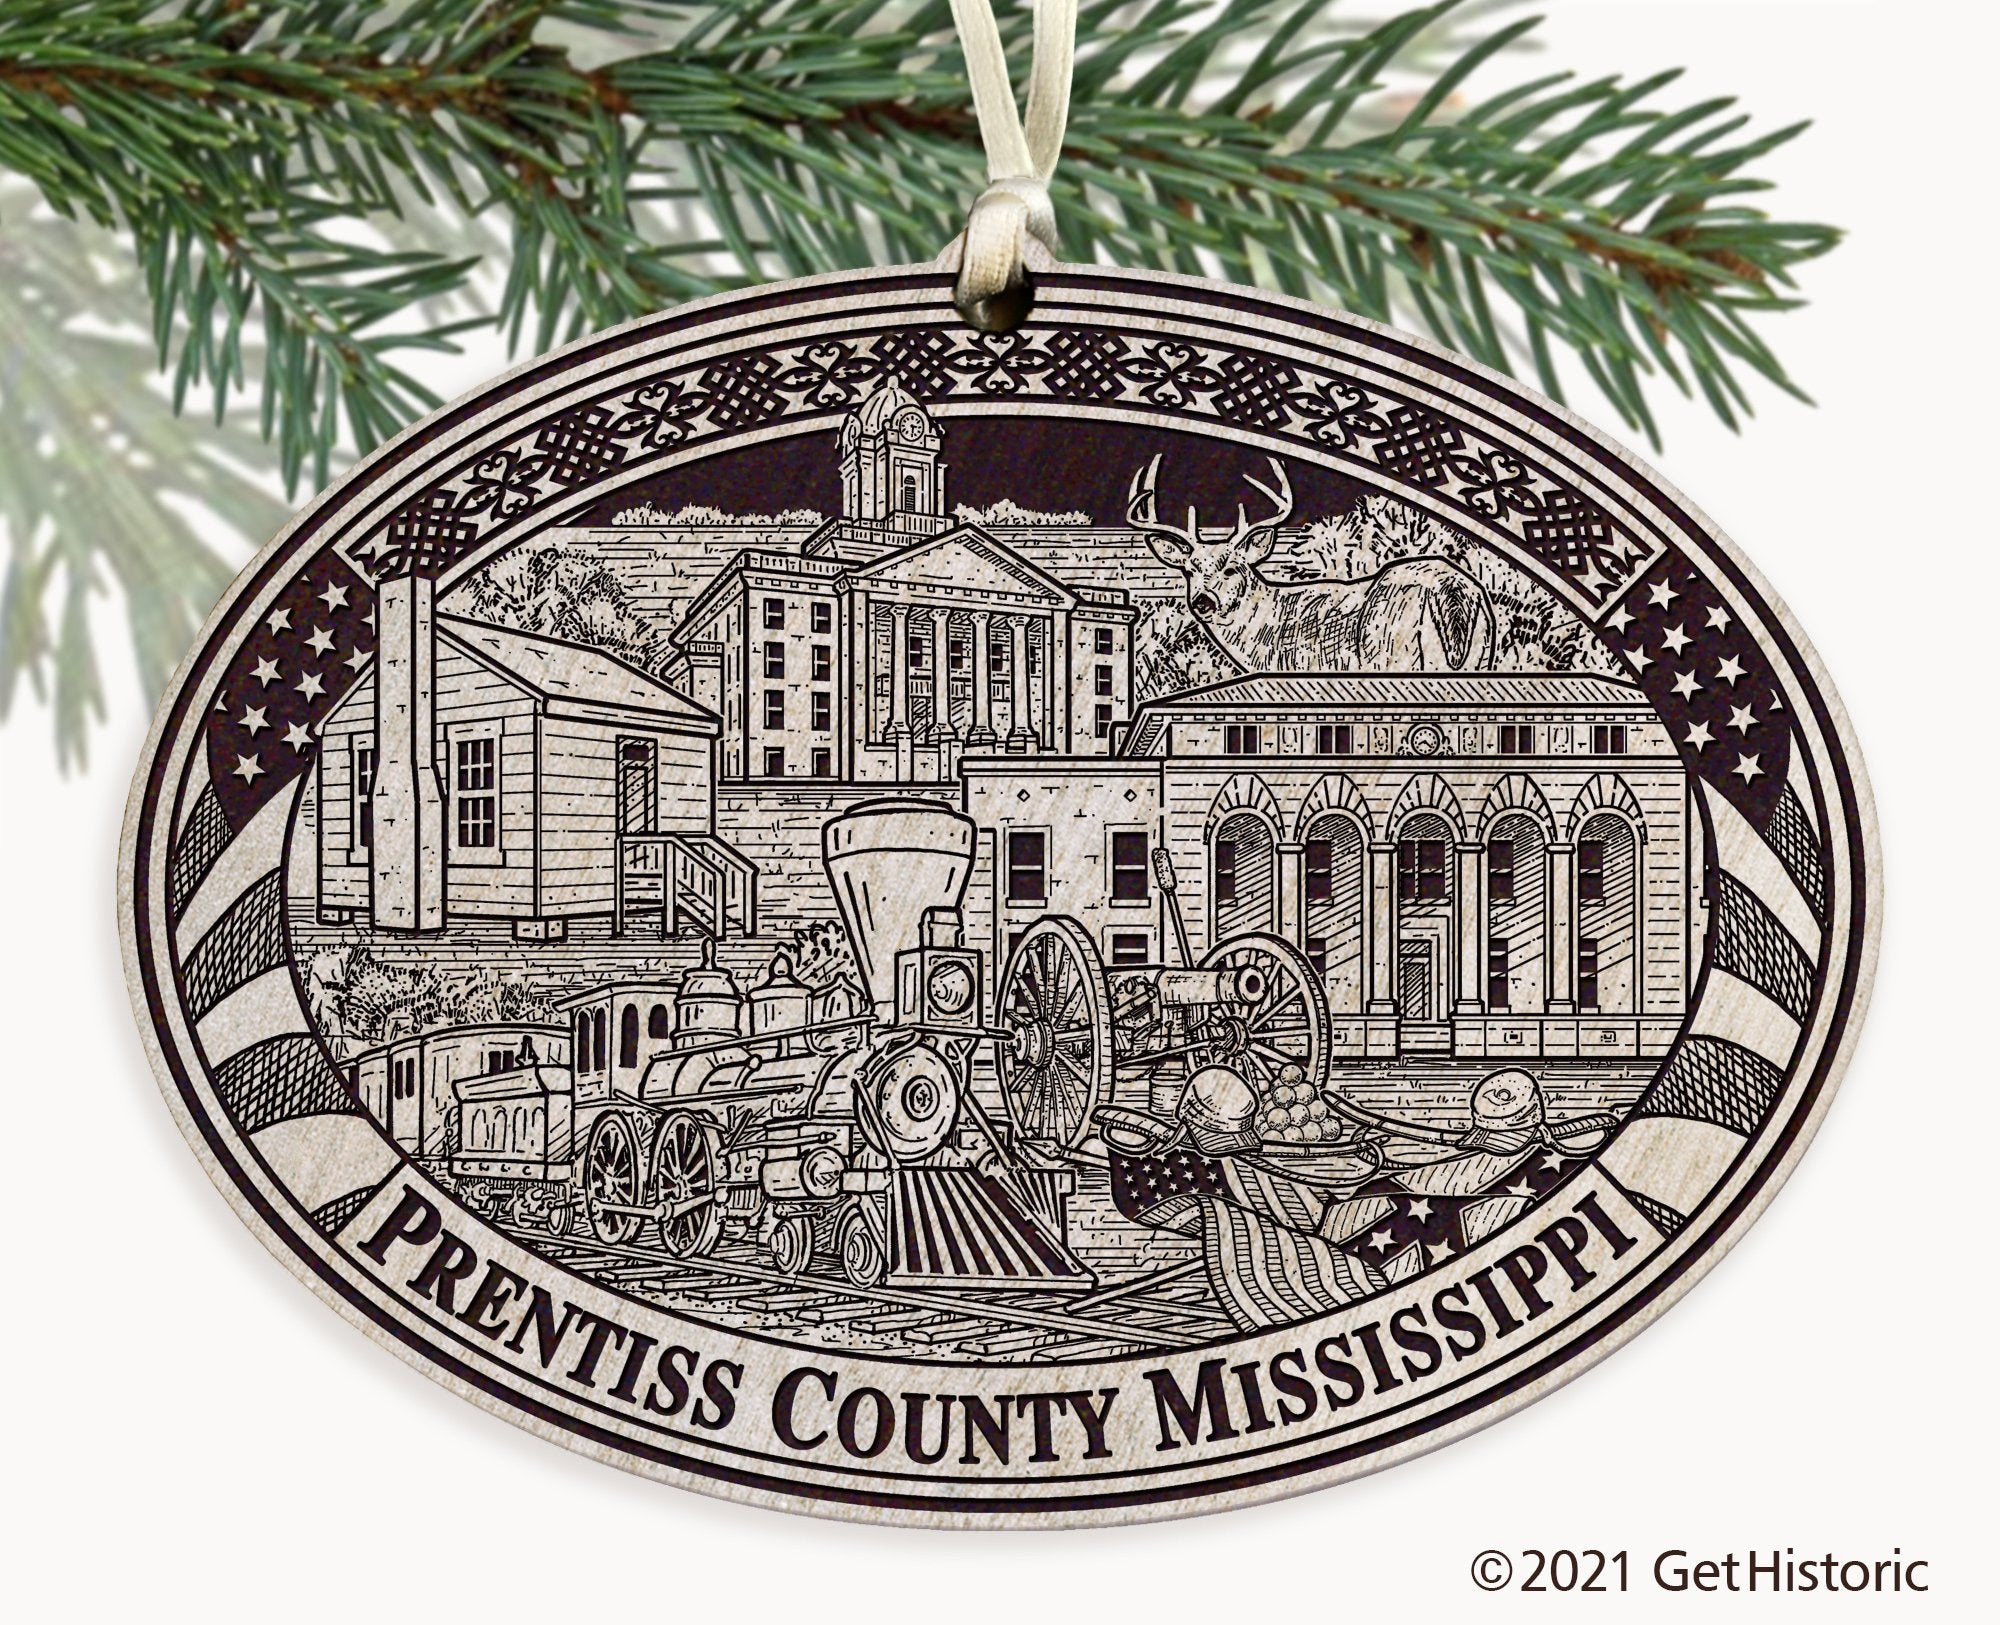 Prentiss County Mississippi Engraved Ornament